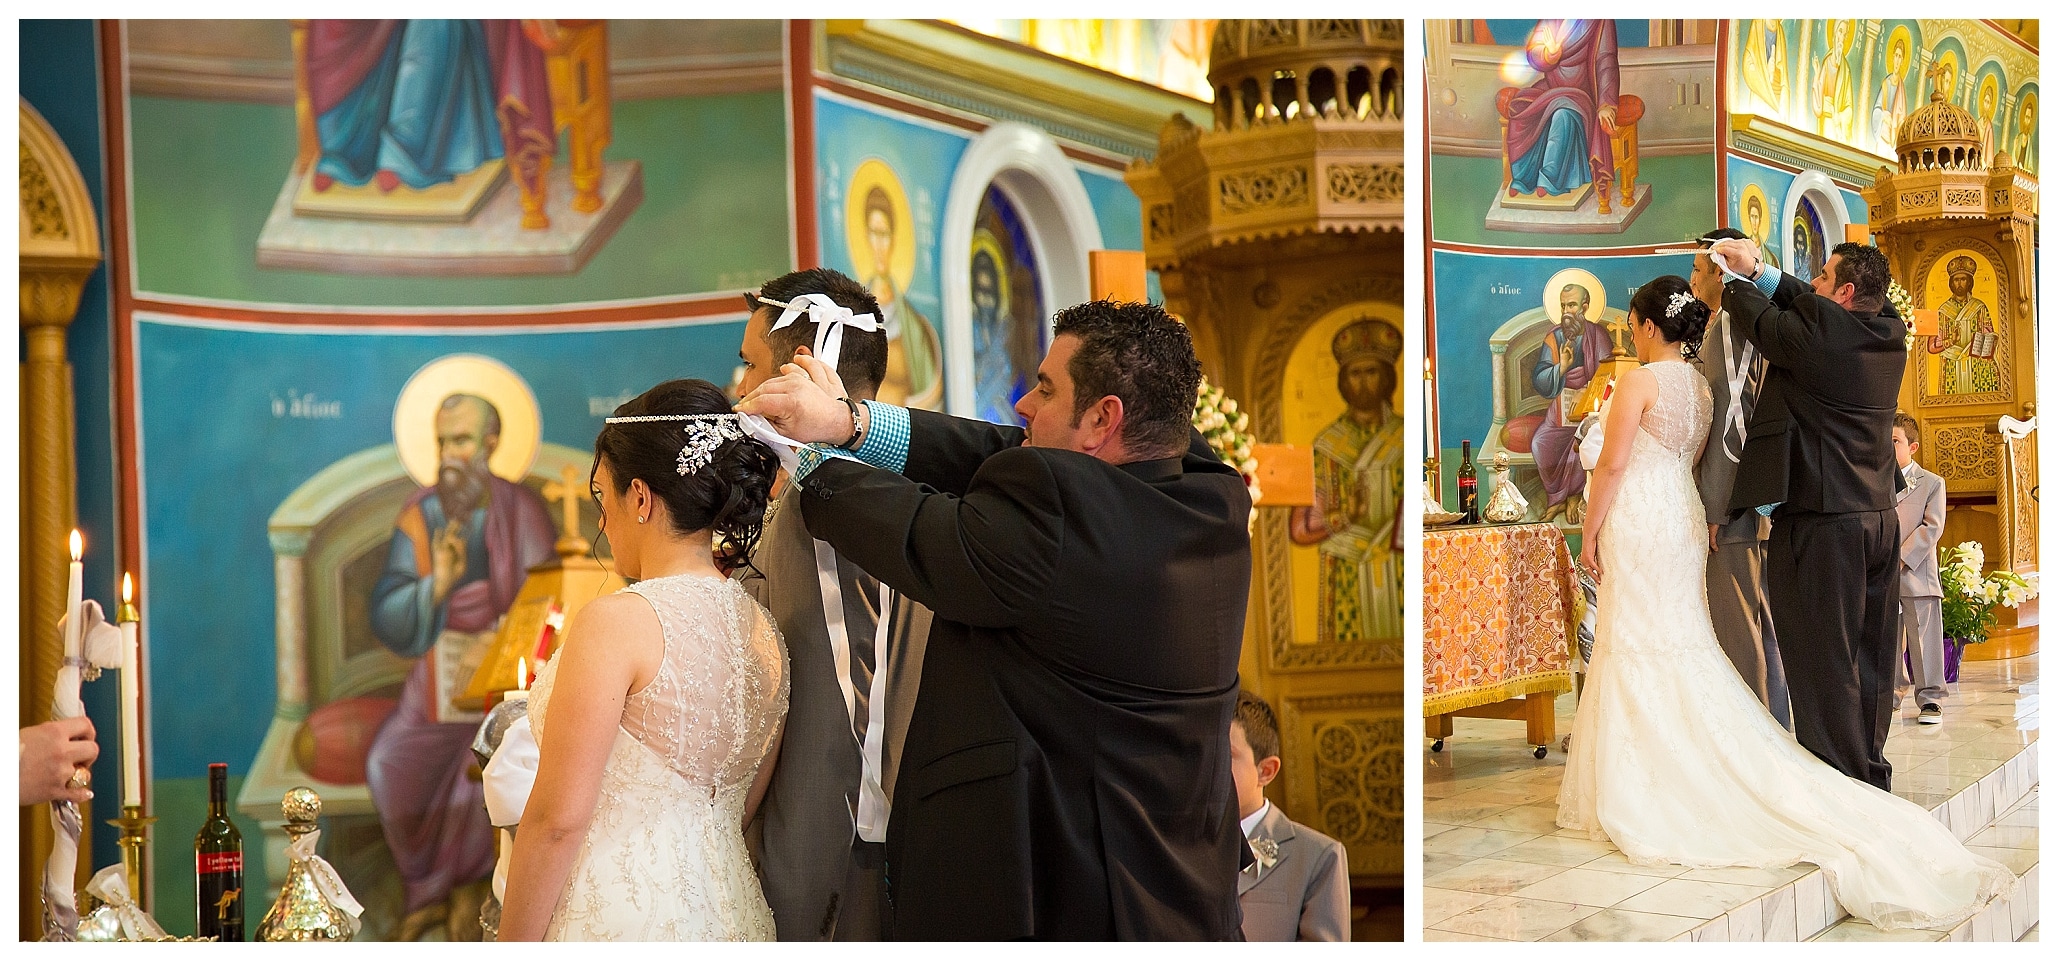 Crown Exchange during Greek wedding ceremony